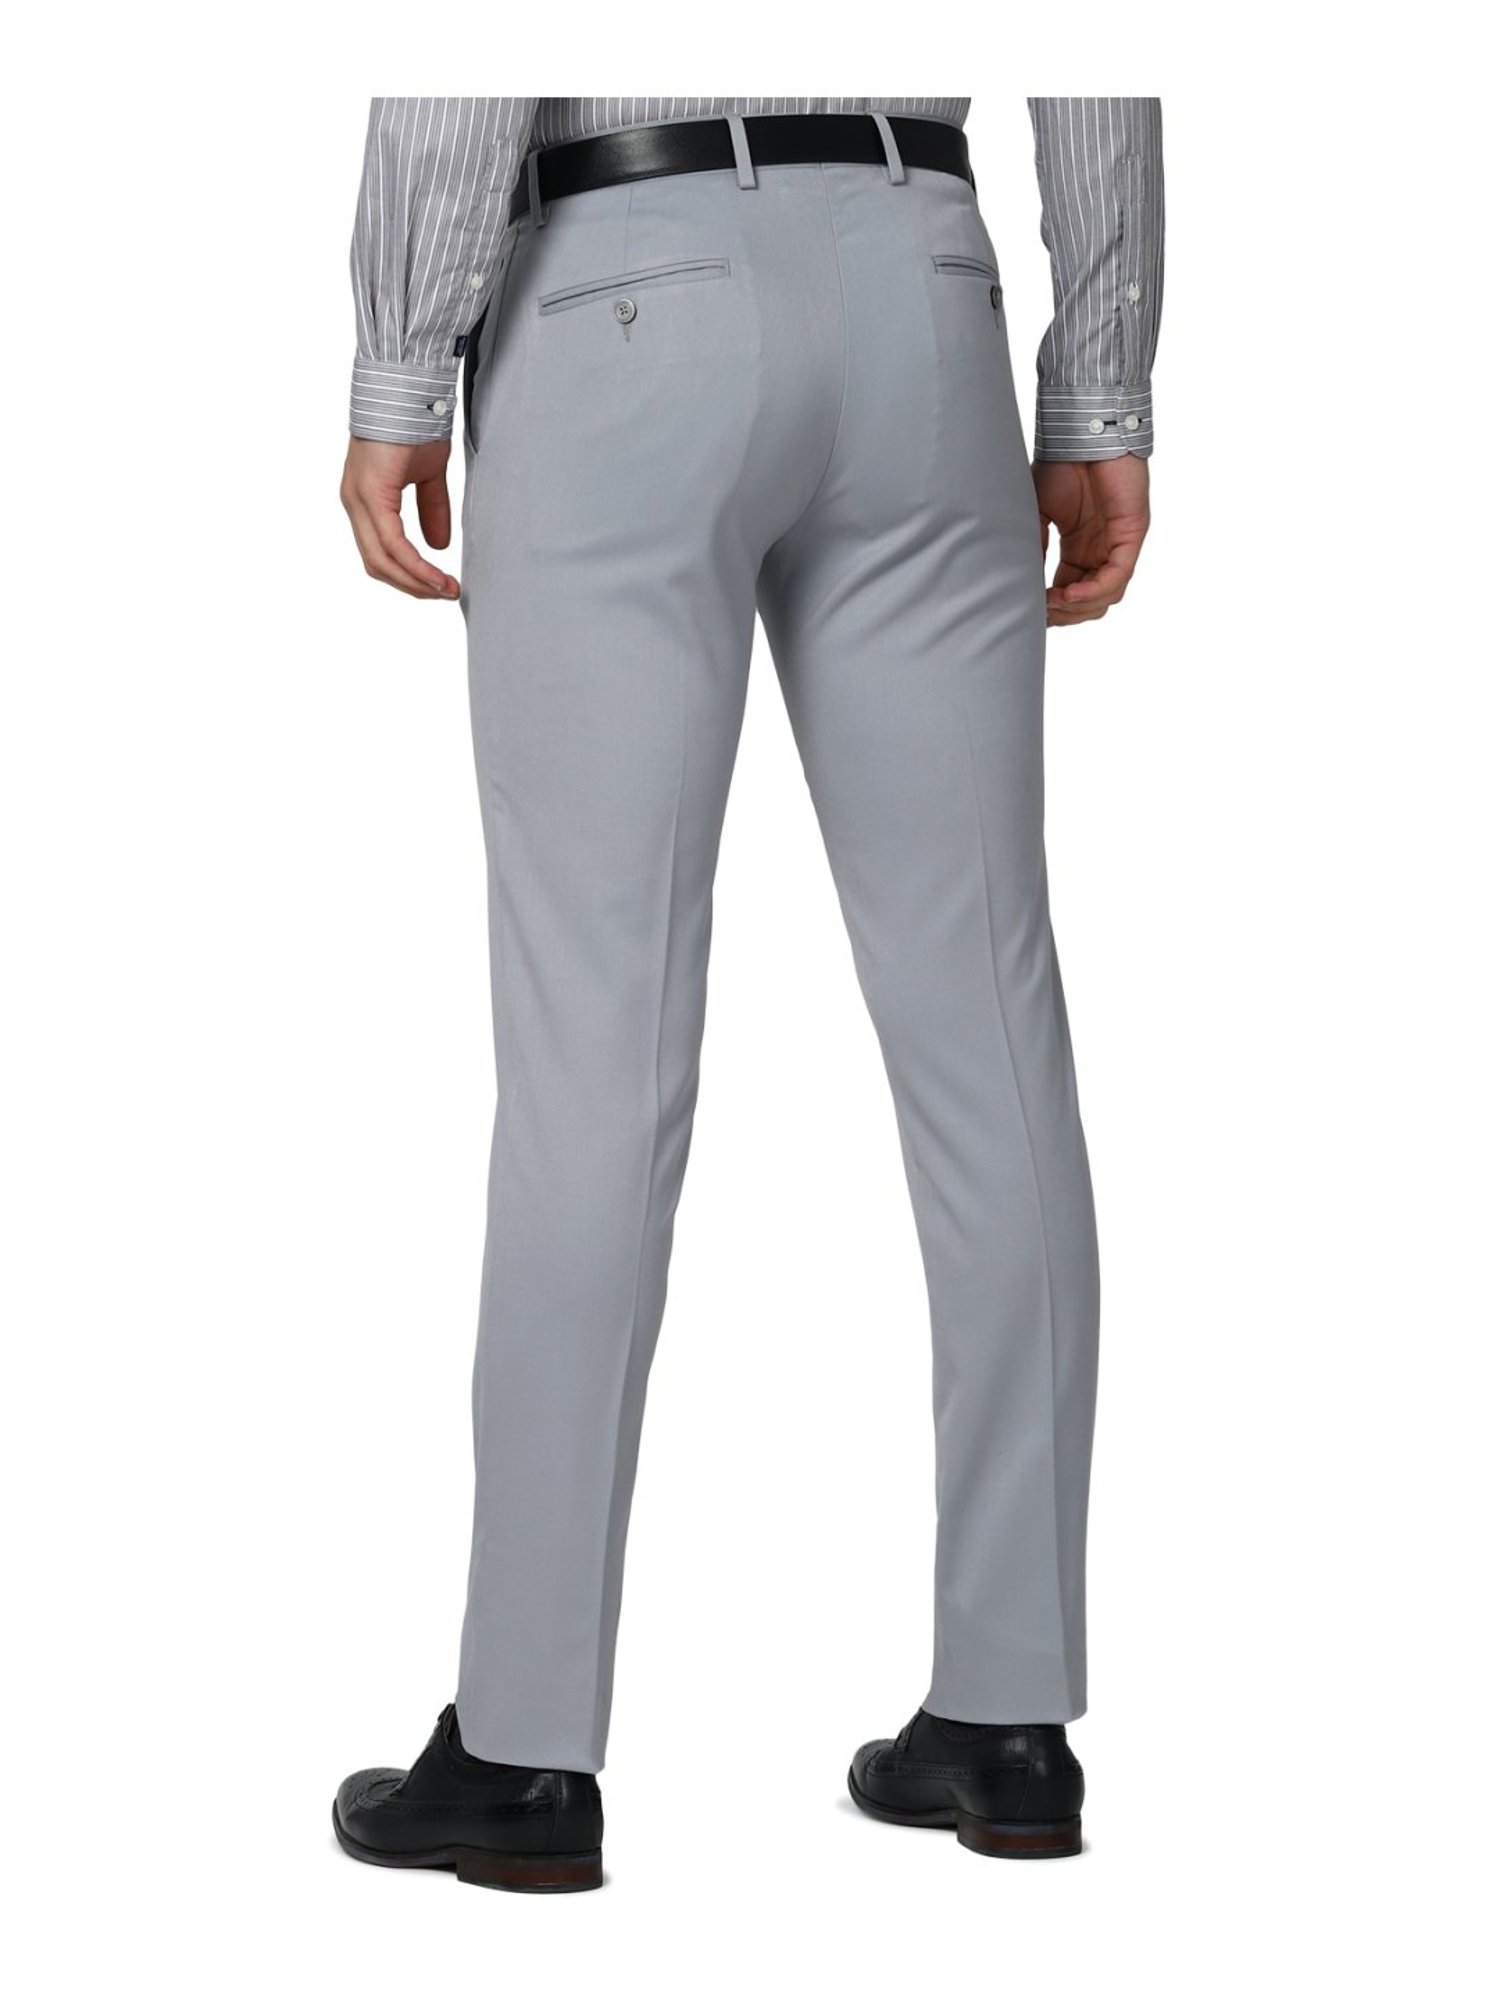 Buy Men Grey Solid Slim Fit Formal Trousers Online  683781  Peter England